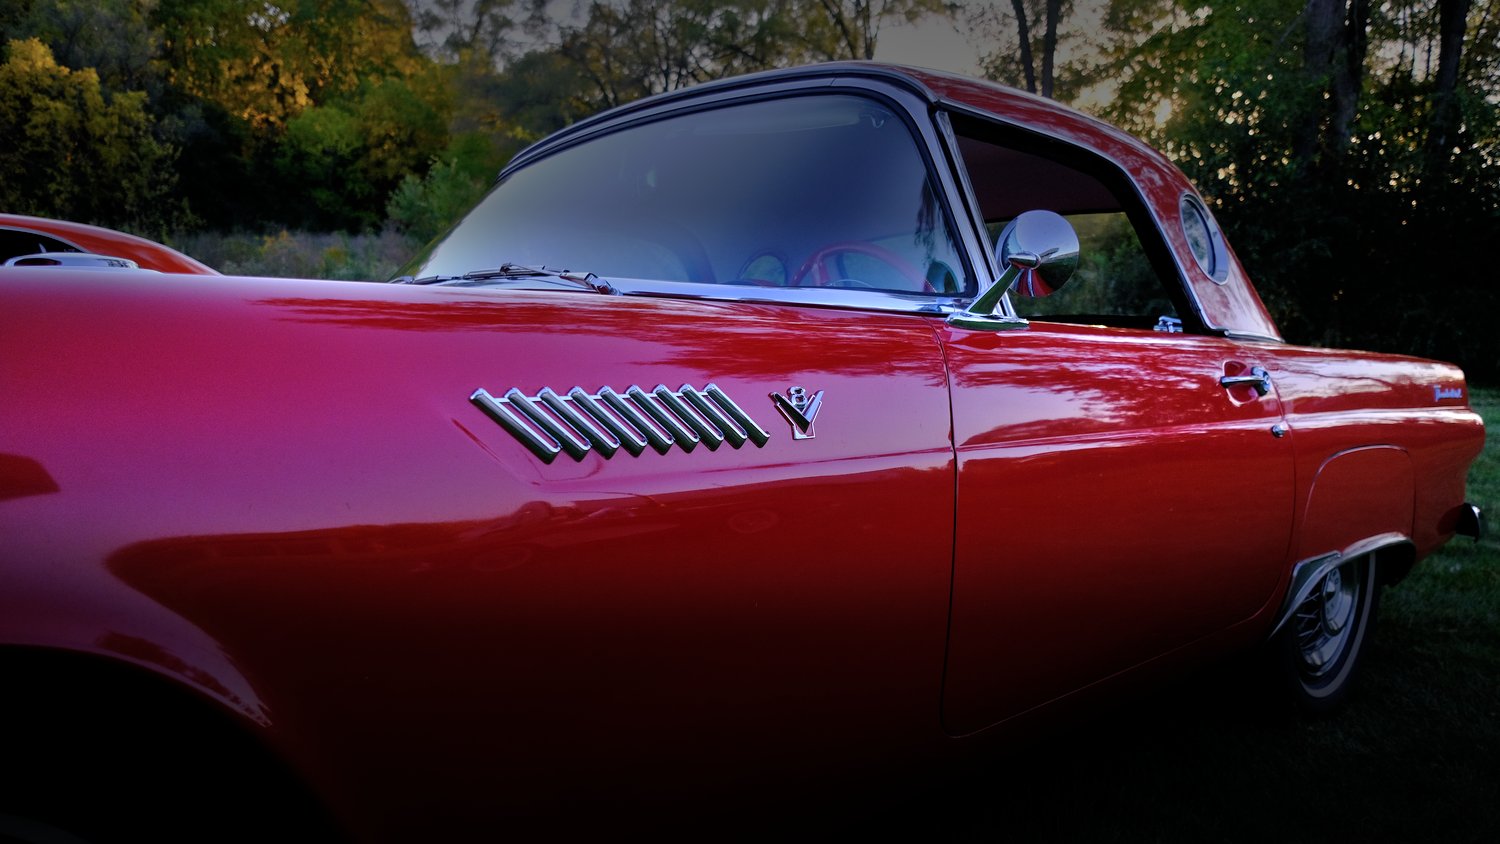 Shiny red vintage Thunderbird.